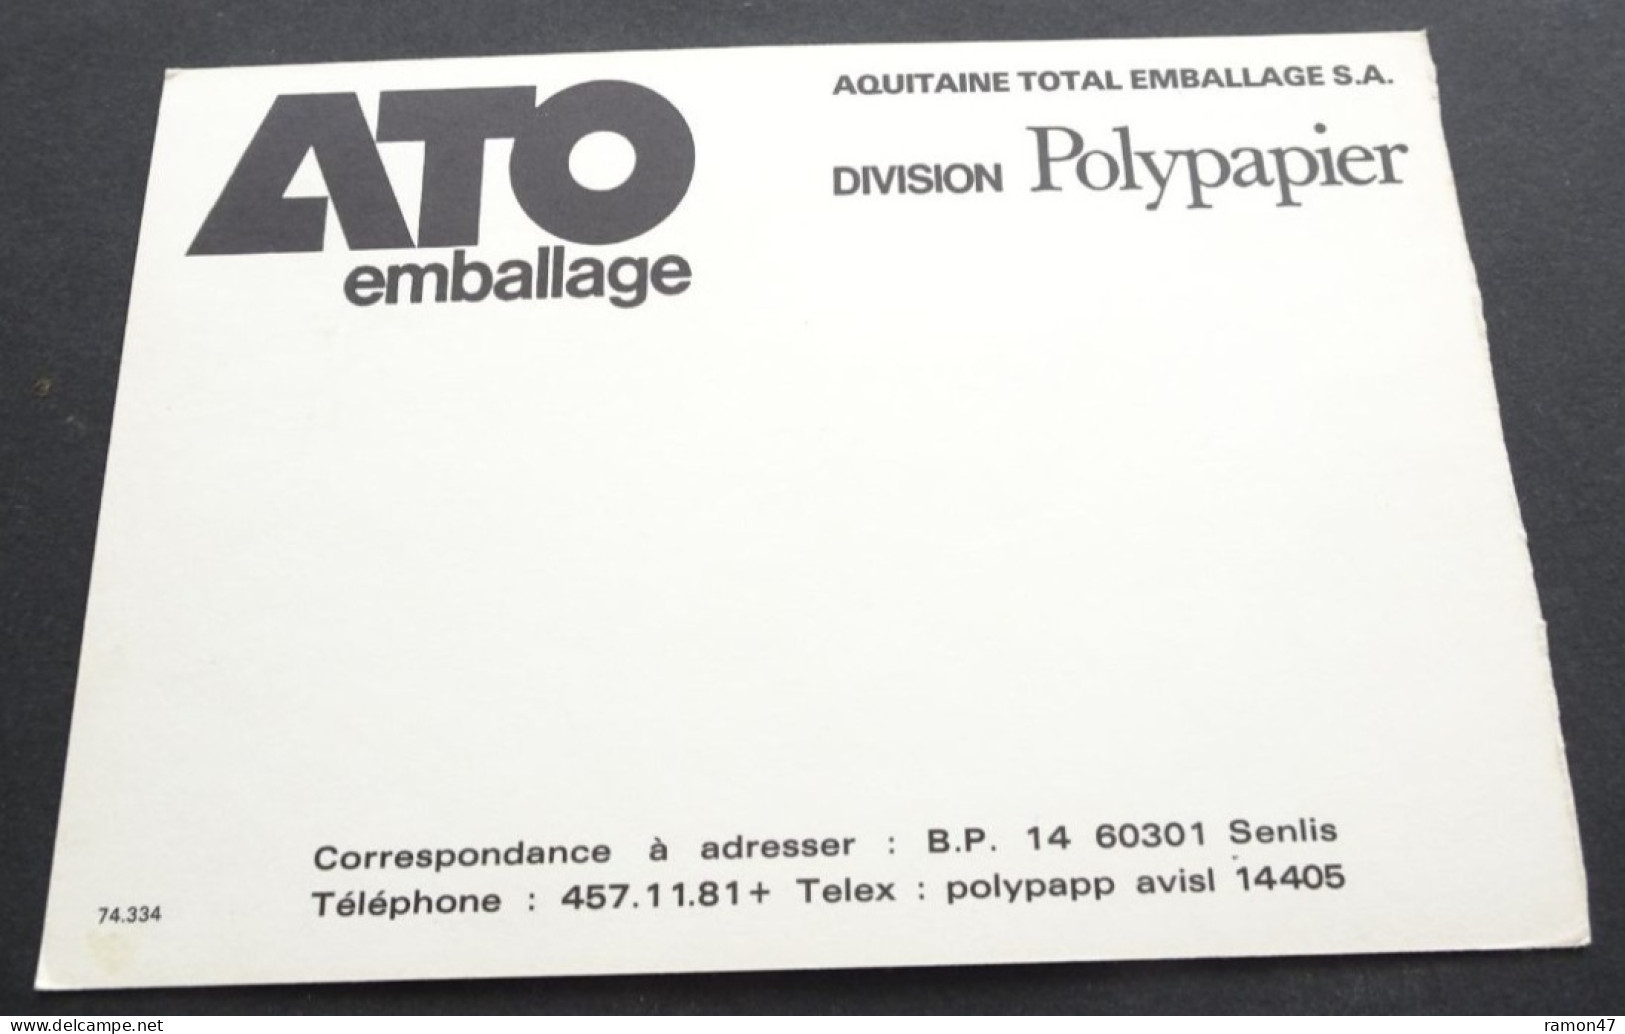 Aquitaine Total Emballage - Division Polypapier - Advertising